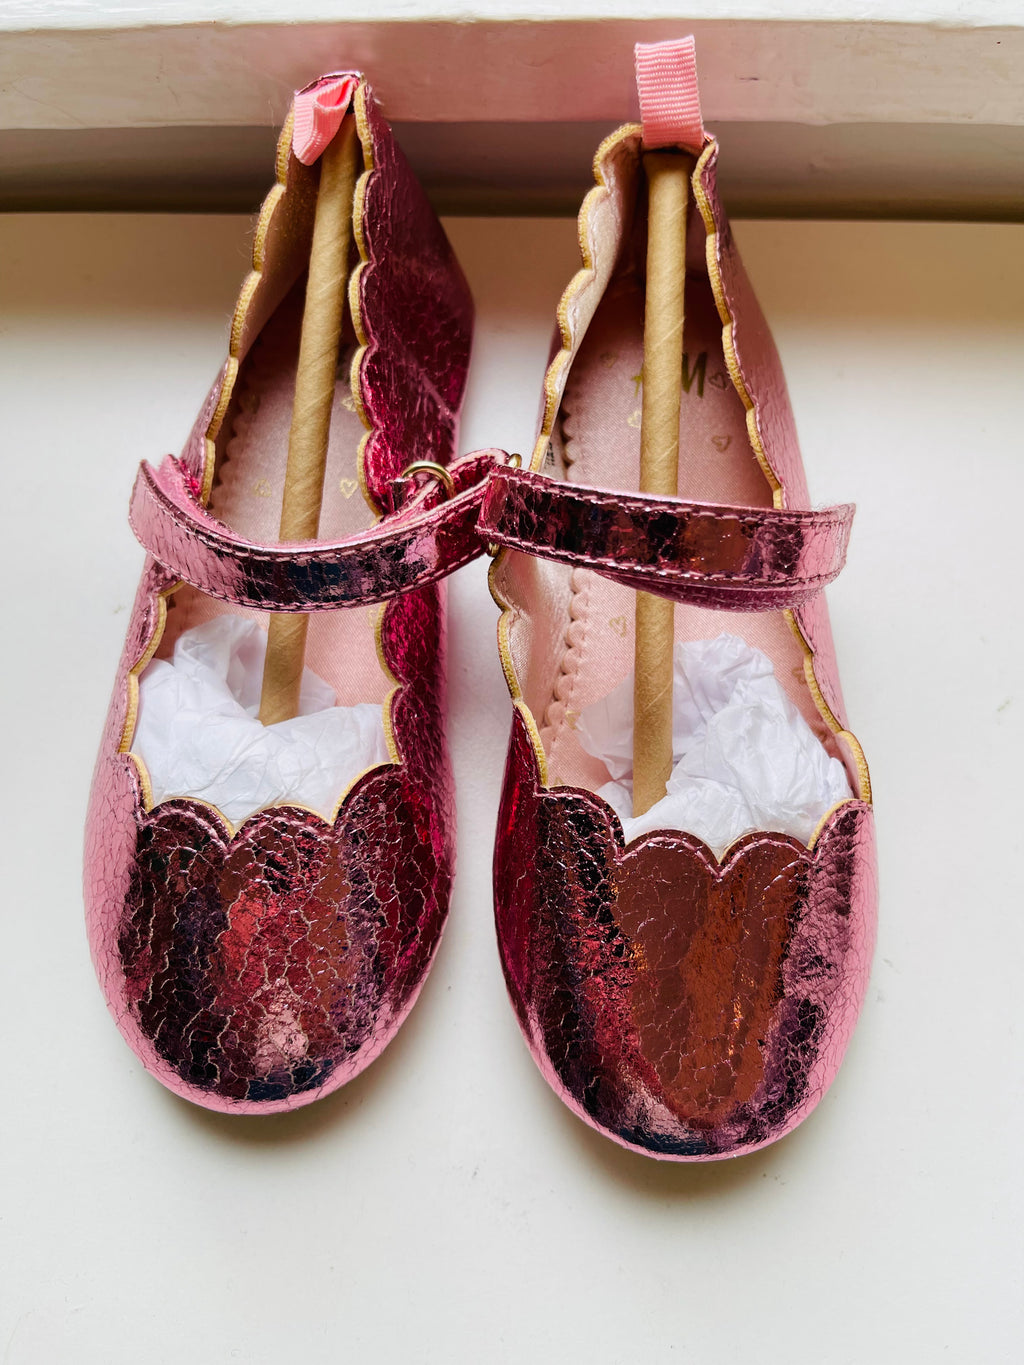 KIDS H&M Shiny Pink Shoes Sz 25 NEW!